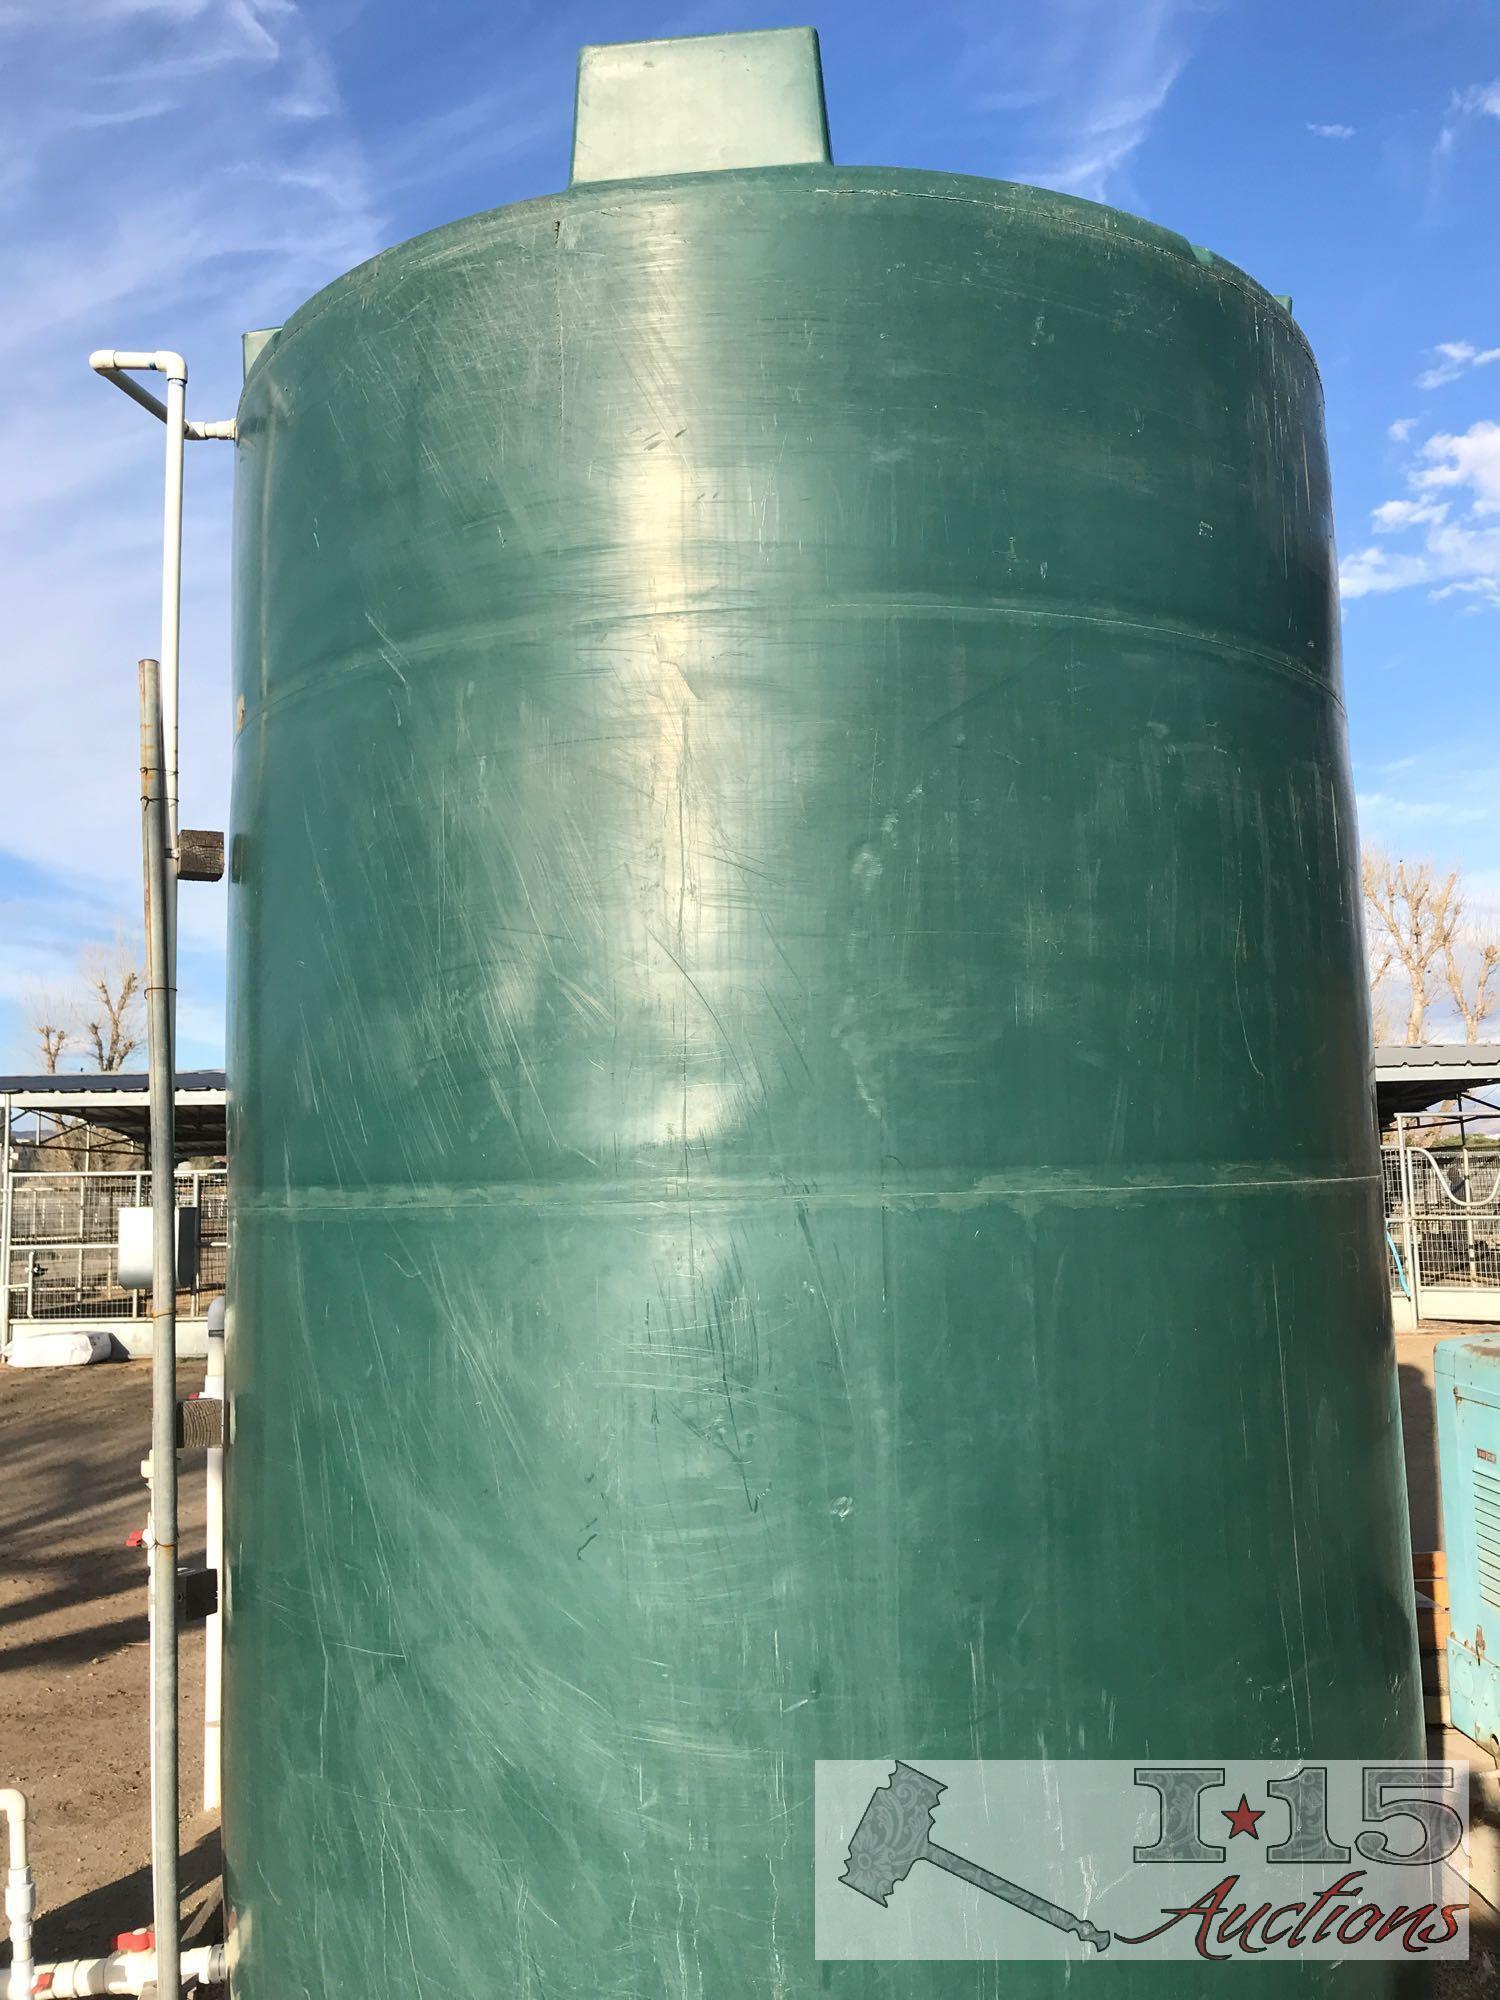 5,000 Gallon Water Tank And Pump